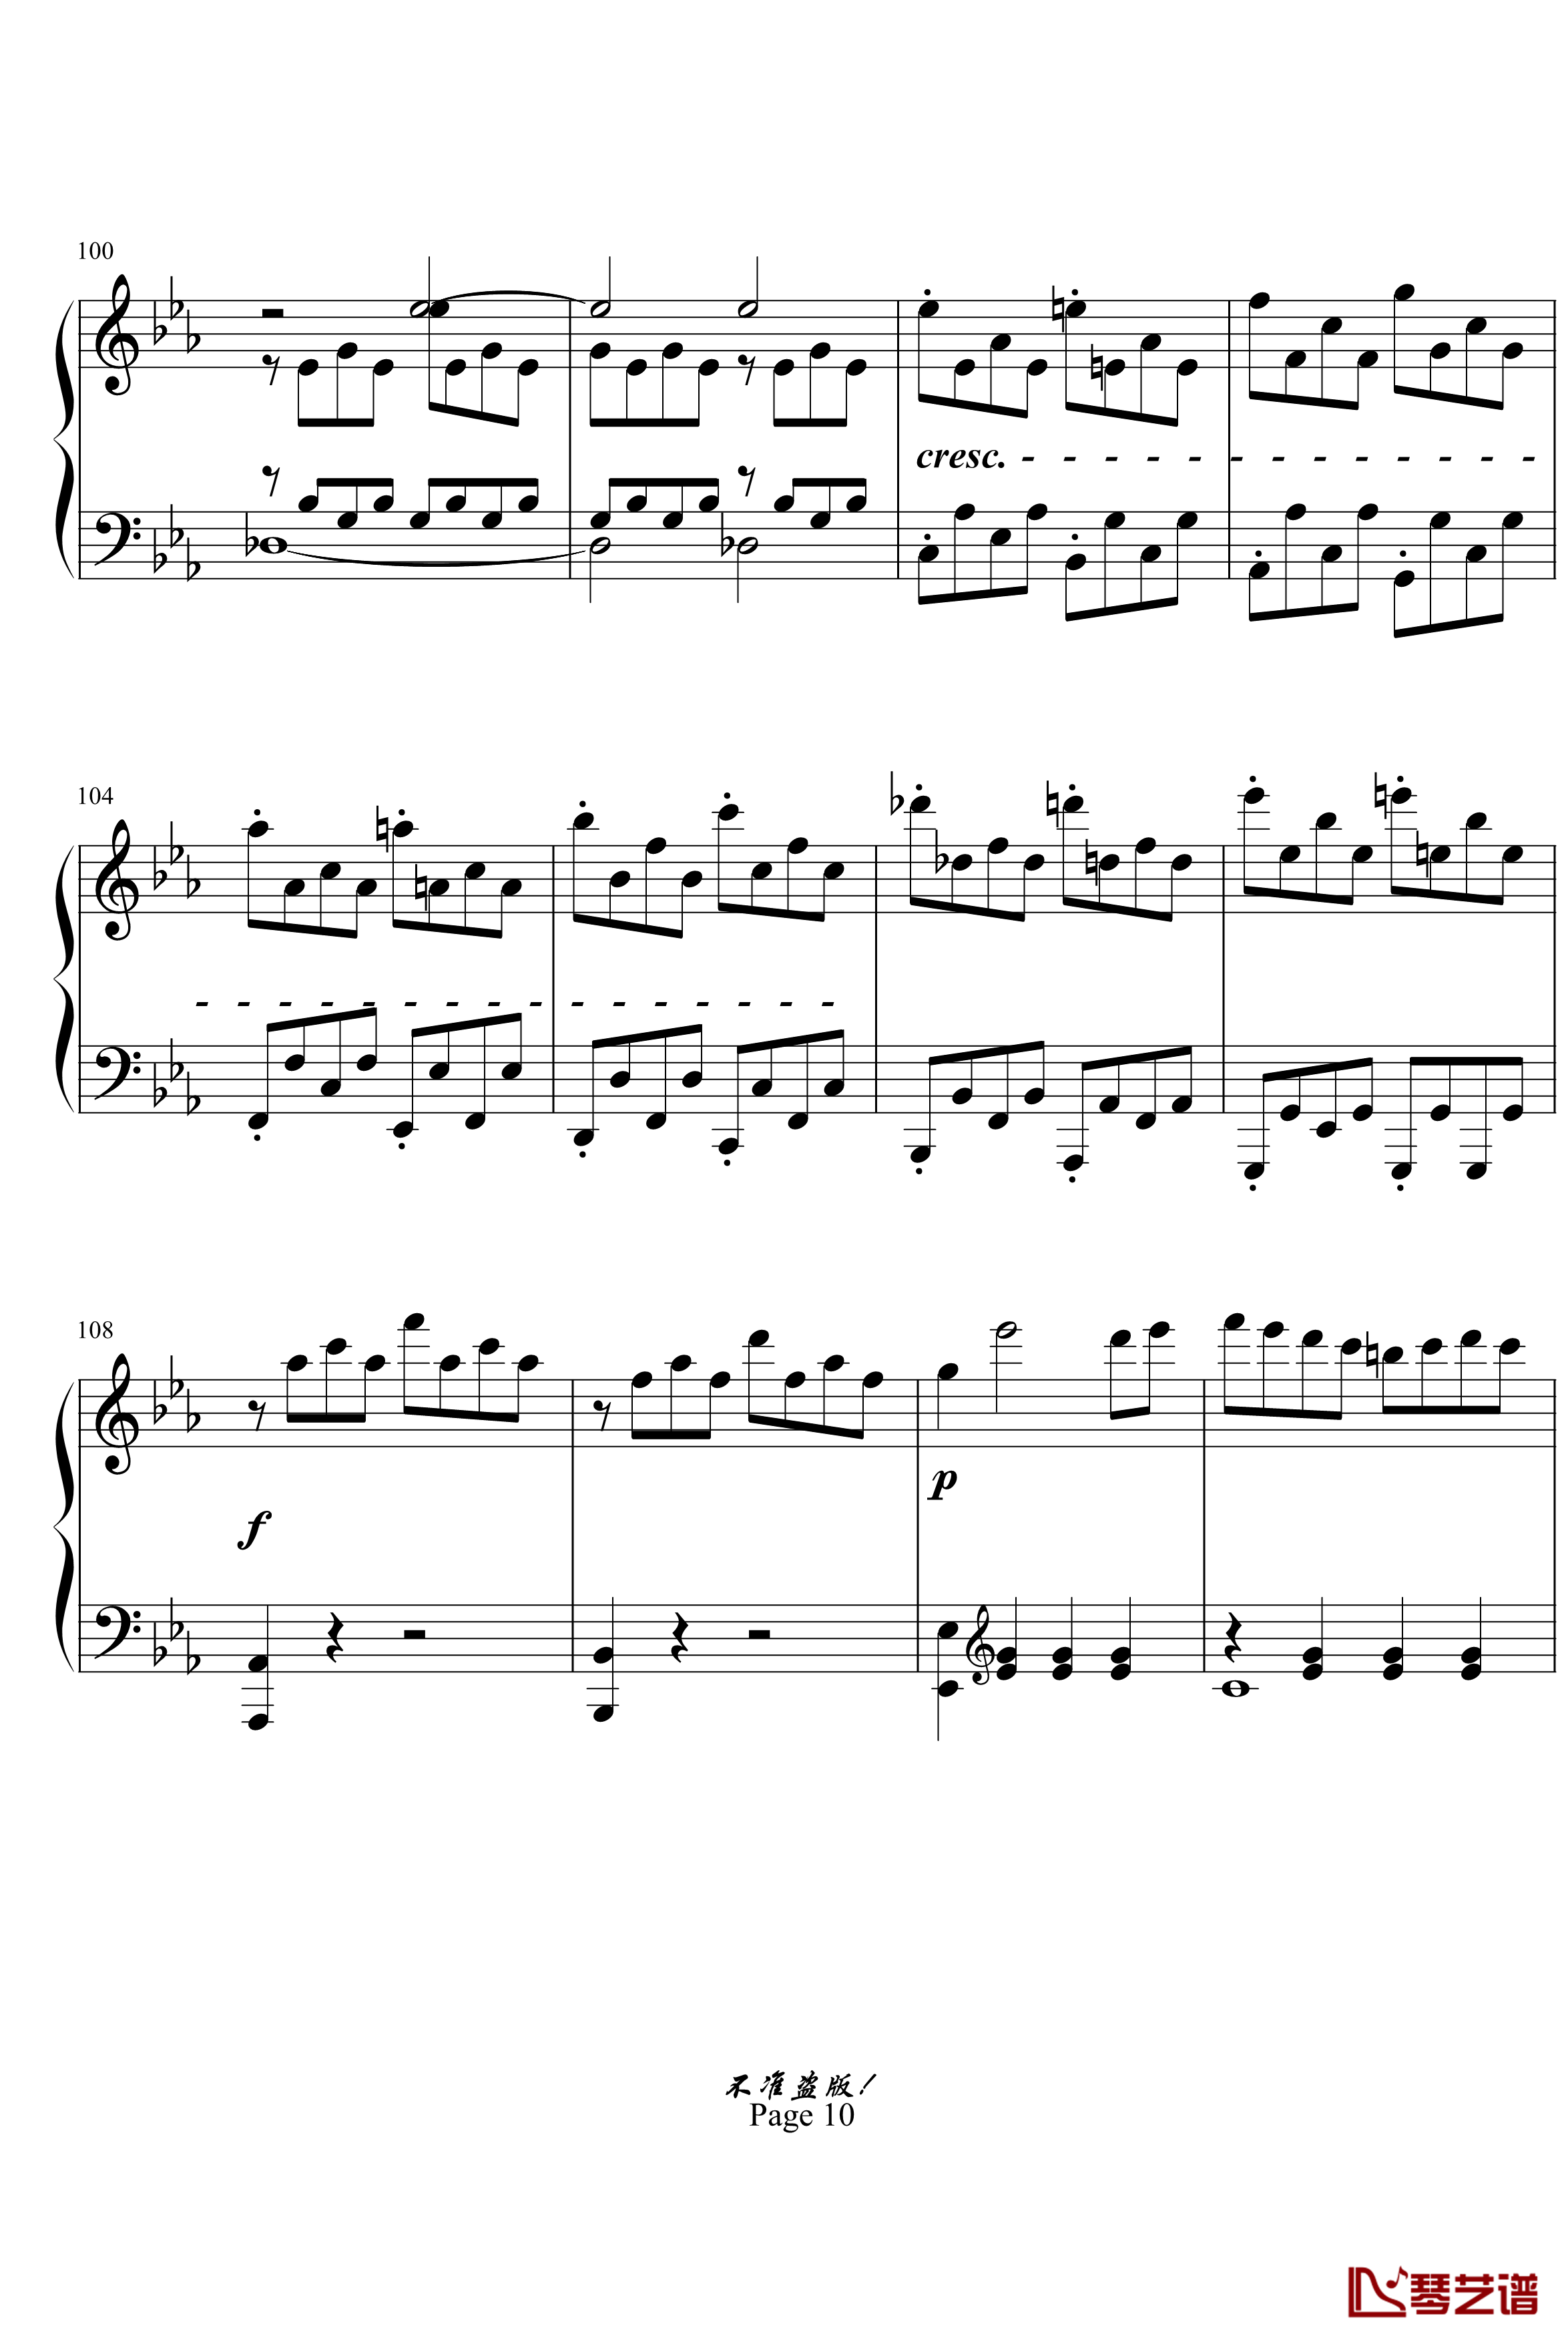 c小调第八钢琴奏鸣曲钢琴谱-悲怆第一乐章-beethoven-贝多芬10